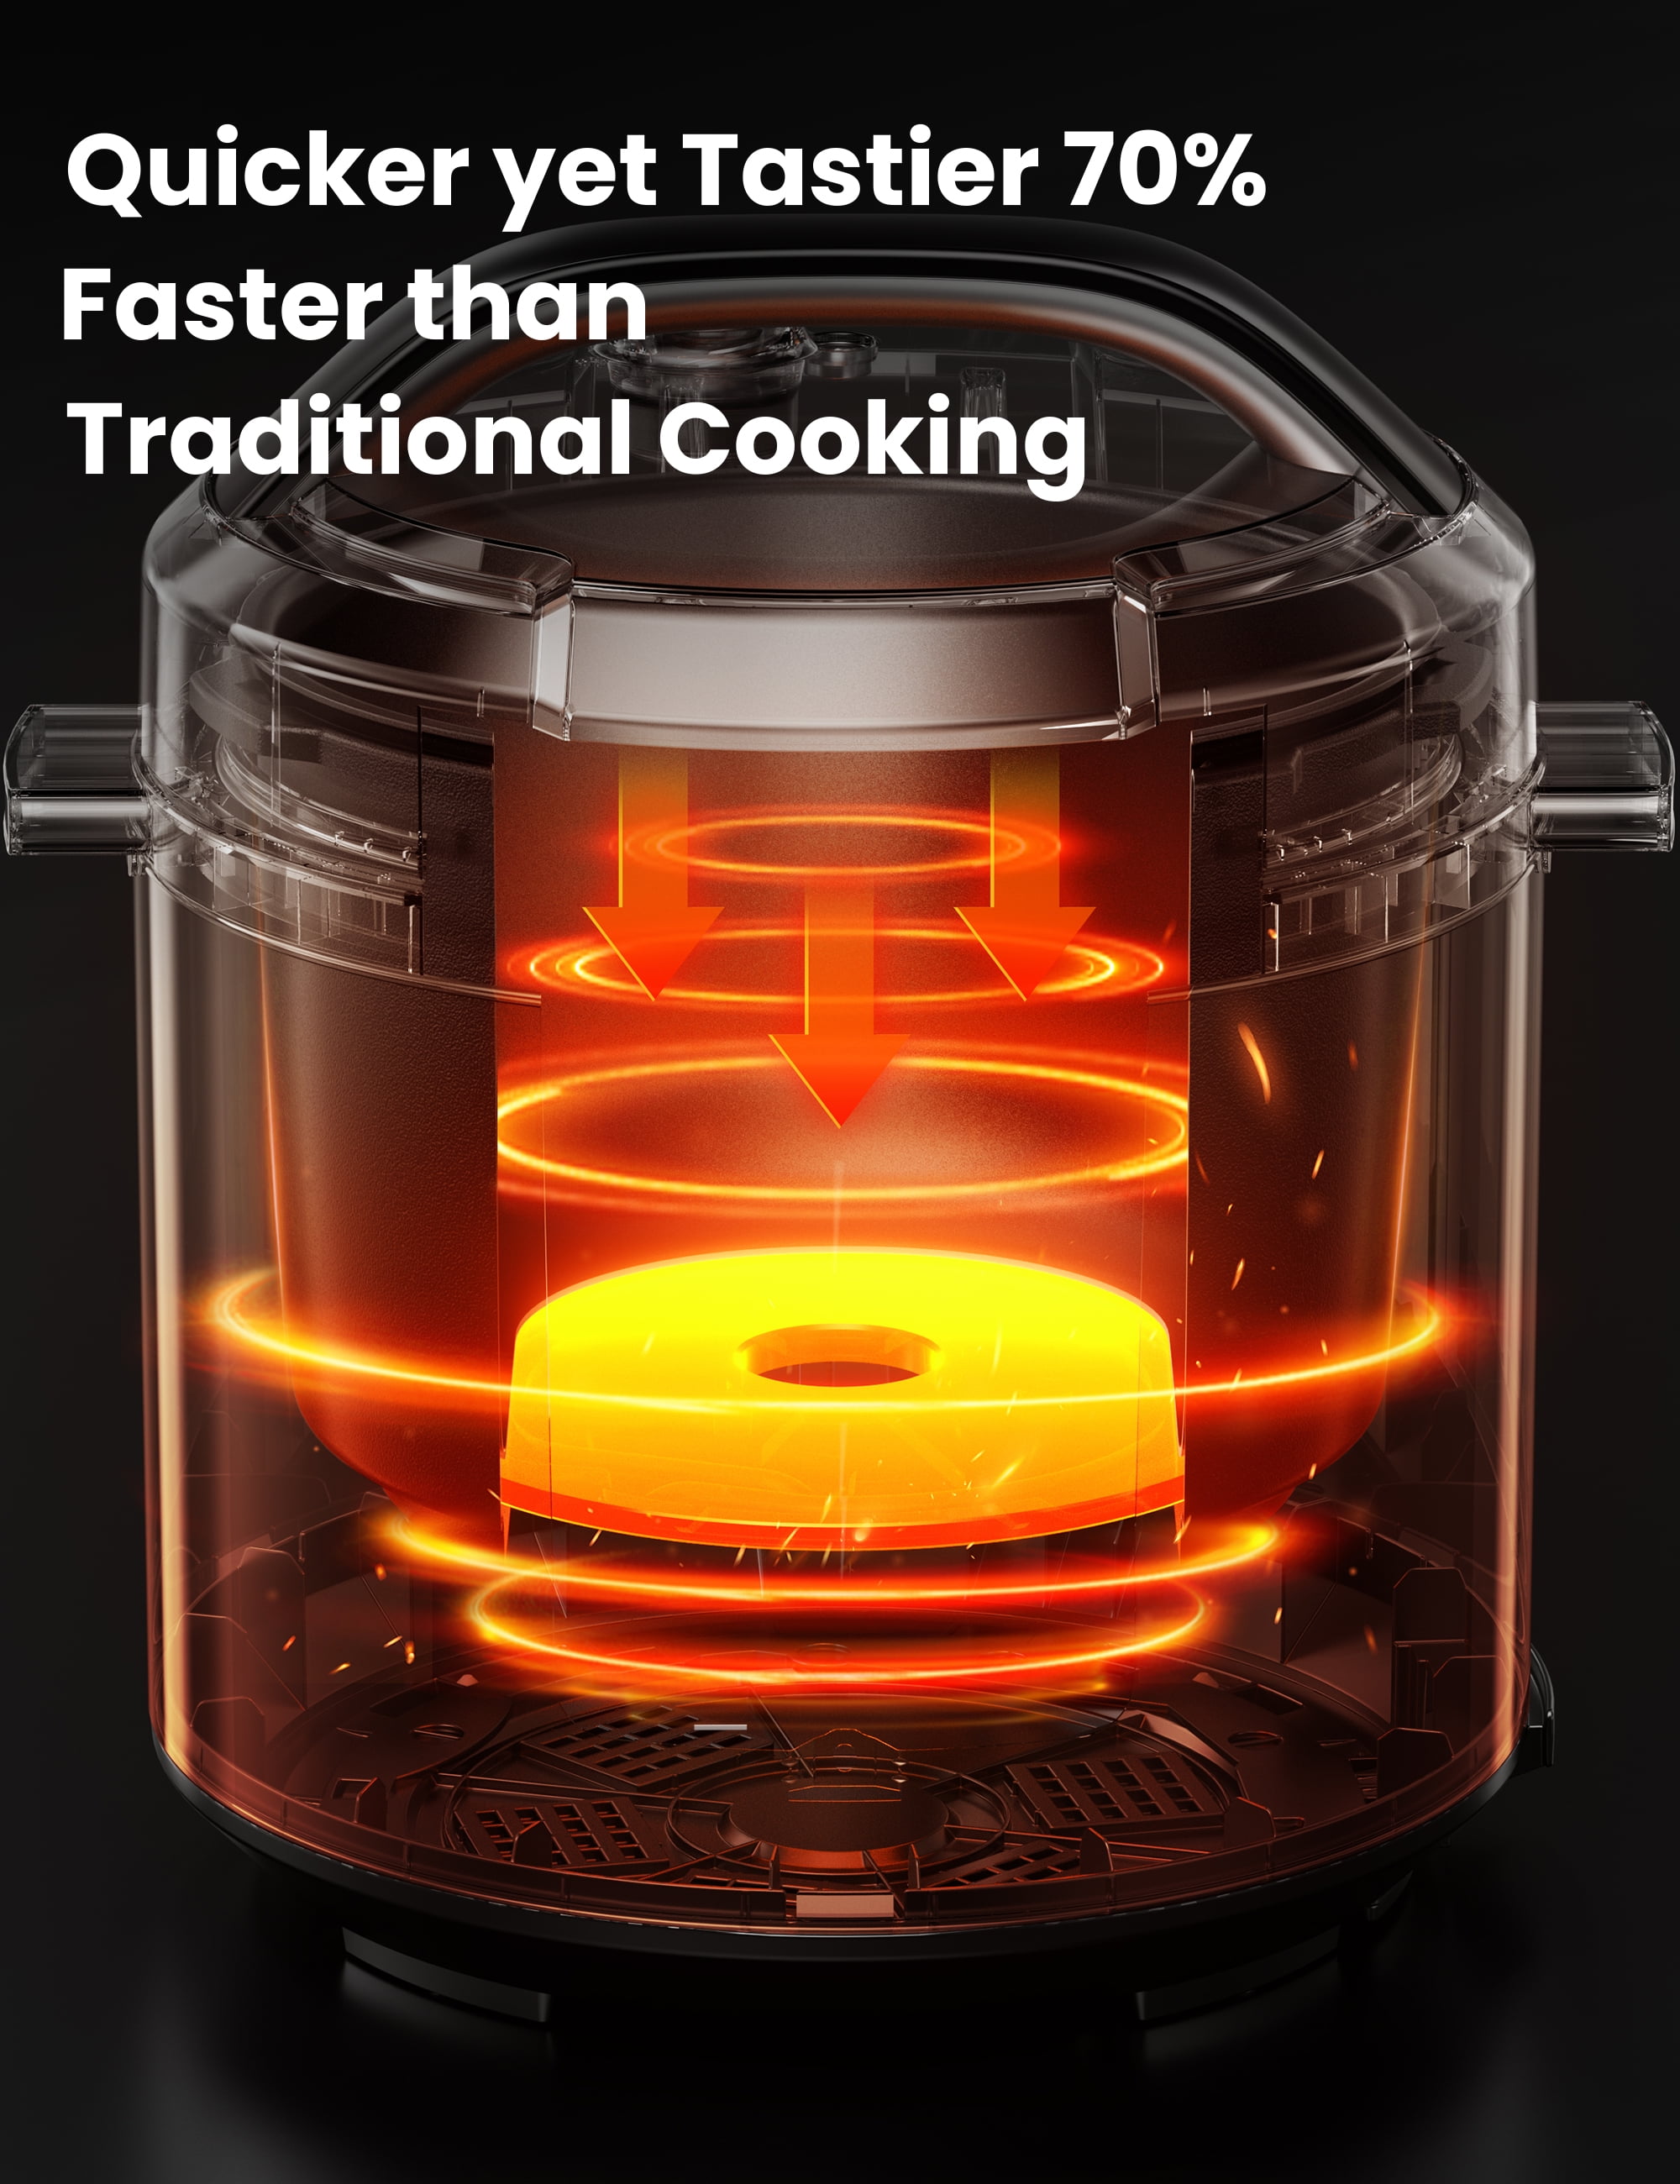 COMFEE’ 9-in-1 Electric Pressure Cooker 14 Presets Instant Multi Cooker Olla de Presion Non-Stick Pot Yogurt Maker Rice Cooker Slow Cooker Sauté